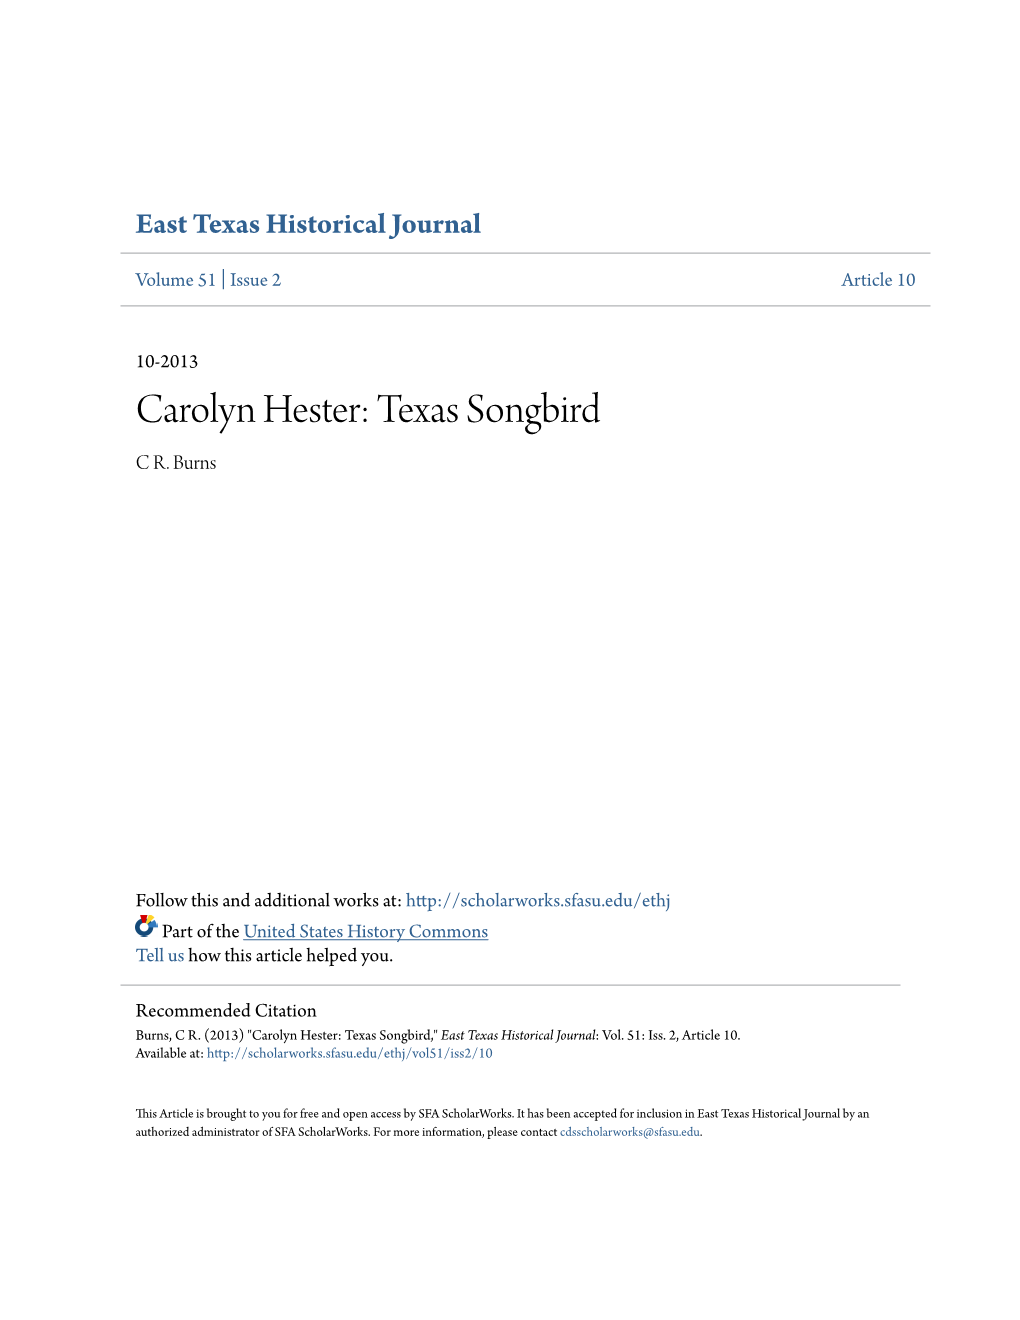 Carolyn Hester: Texas Songbird C R